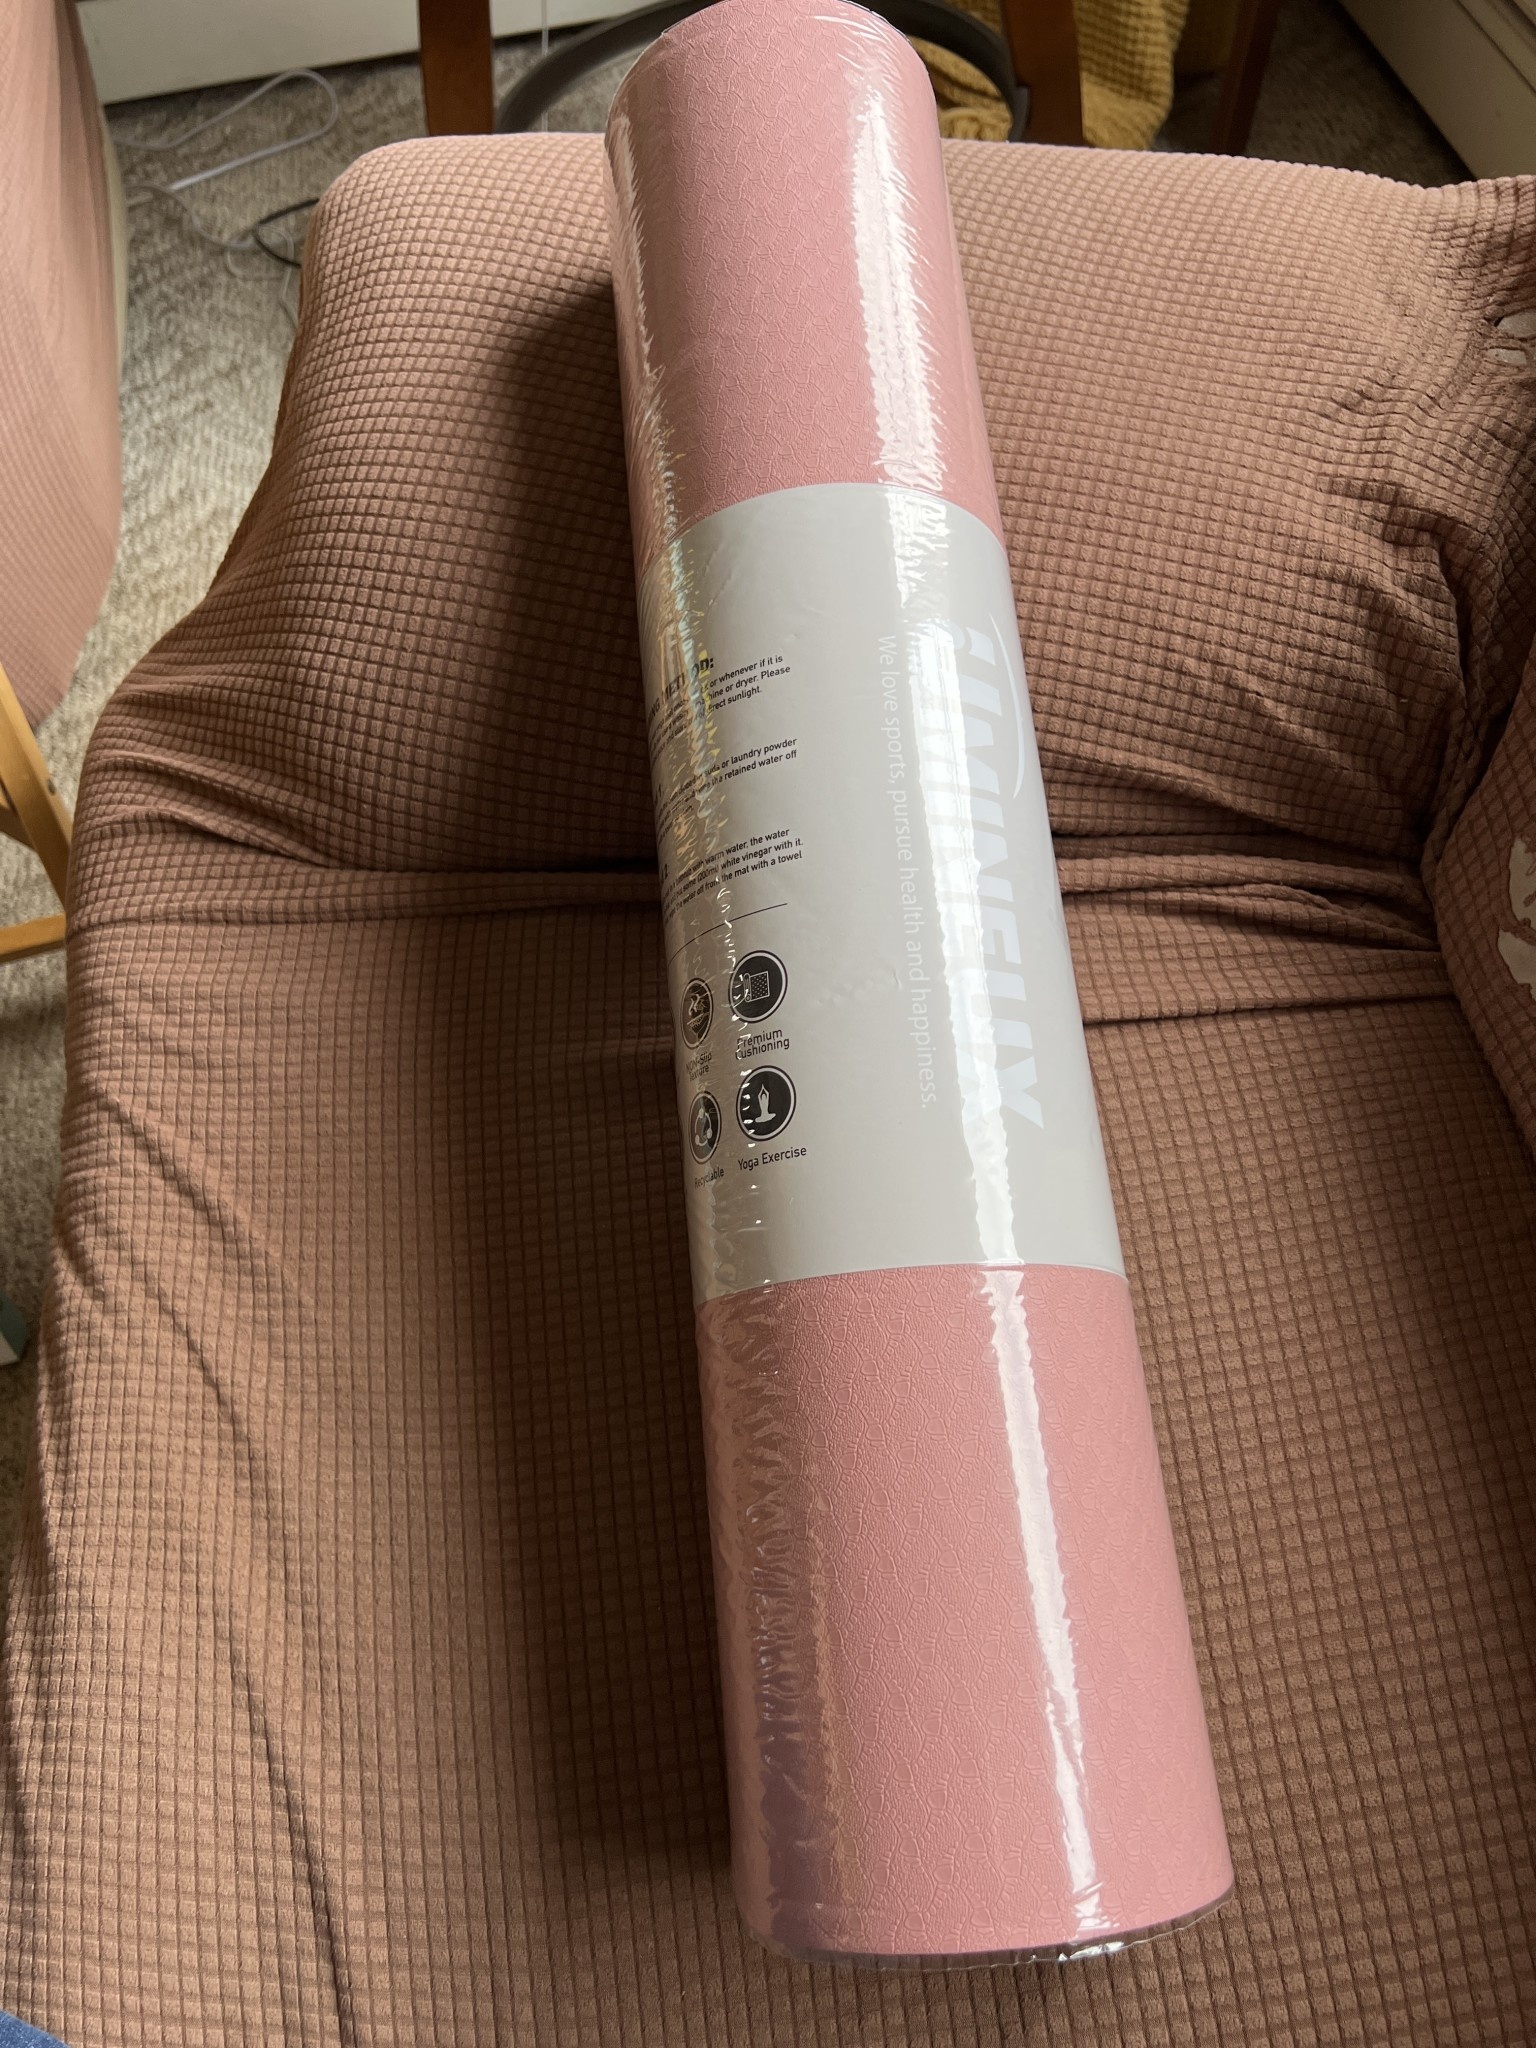 Umineux - pink/grey yoga mat - D3 Surplus Outlet